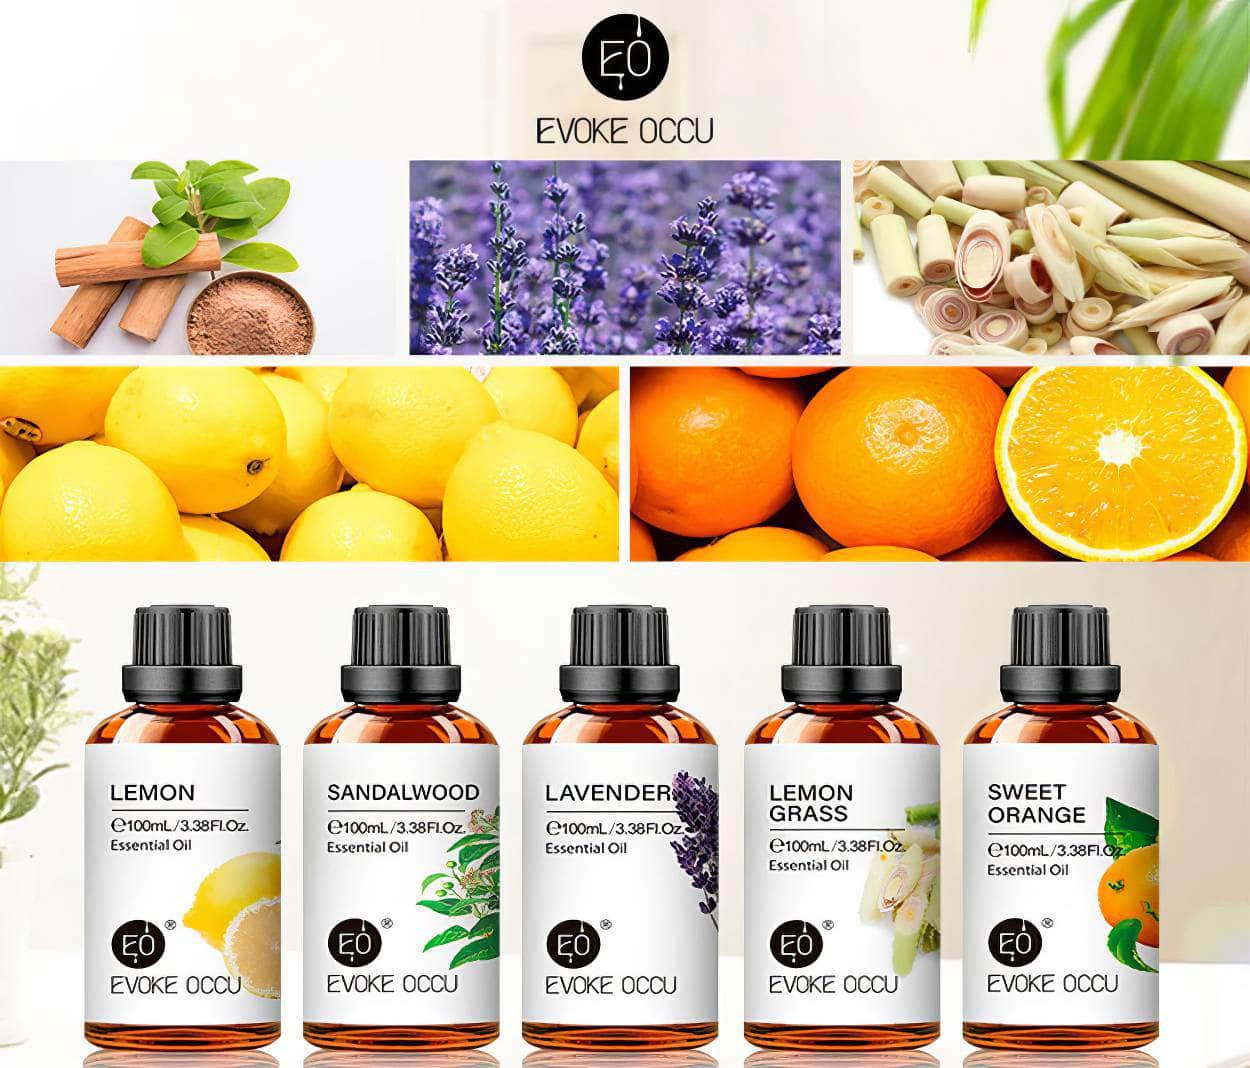 100ml Essential Oils for Diffuser and Humidifier: Vanilla, Eucalyptus, Jasmine, Rose, Lavender, Rosemary, Peppermint, Tea Tree